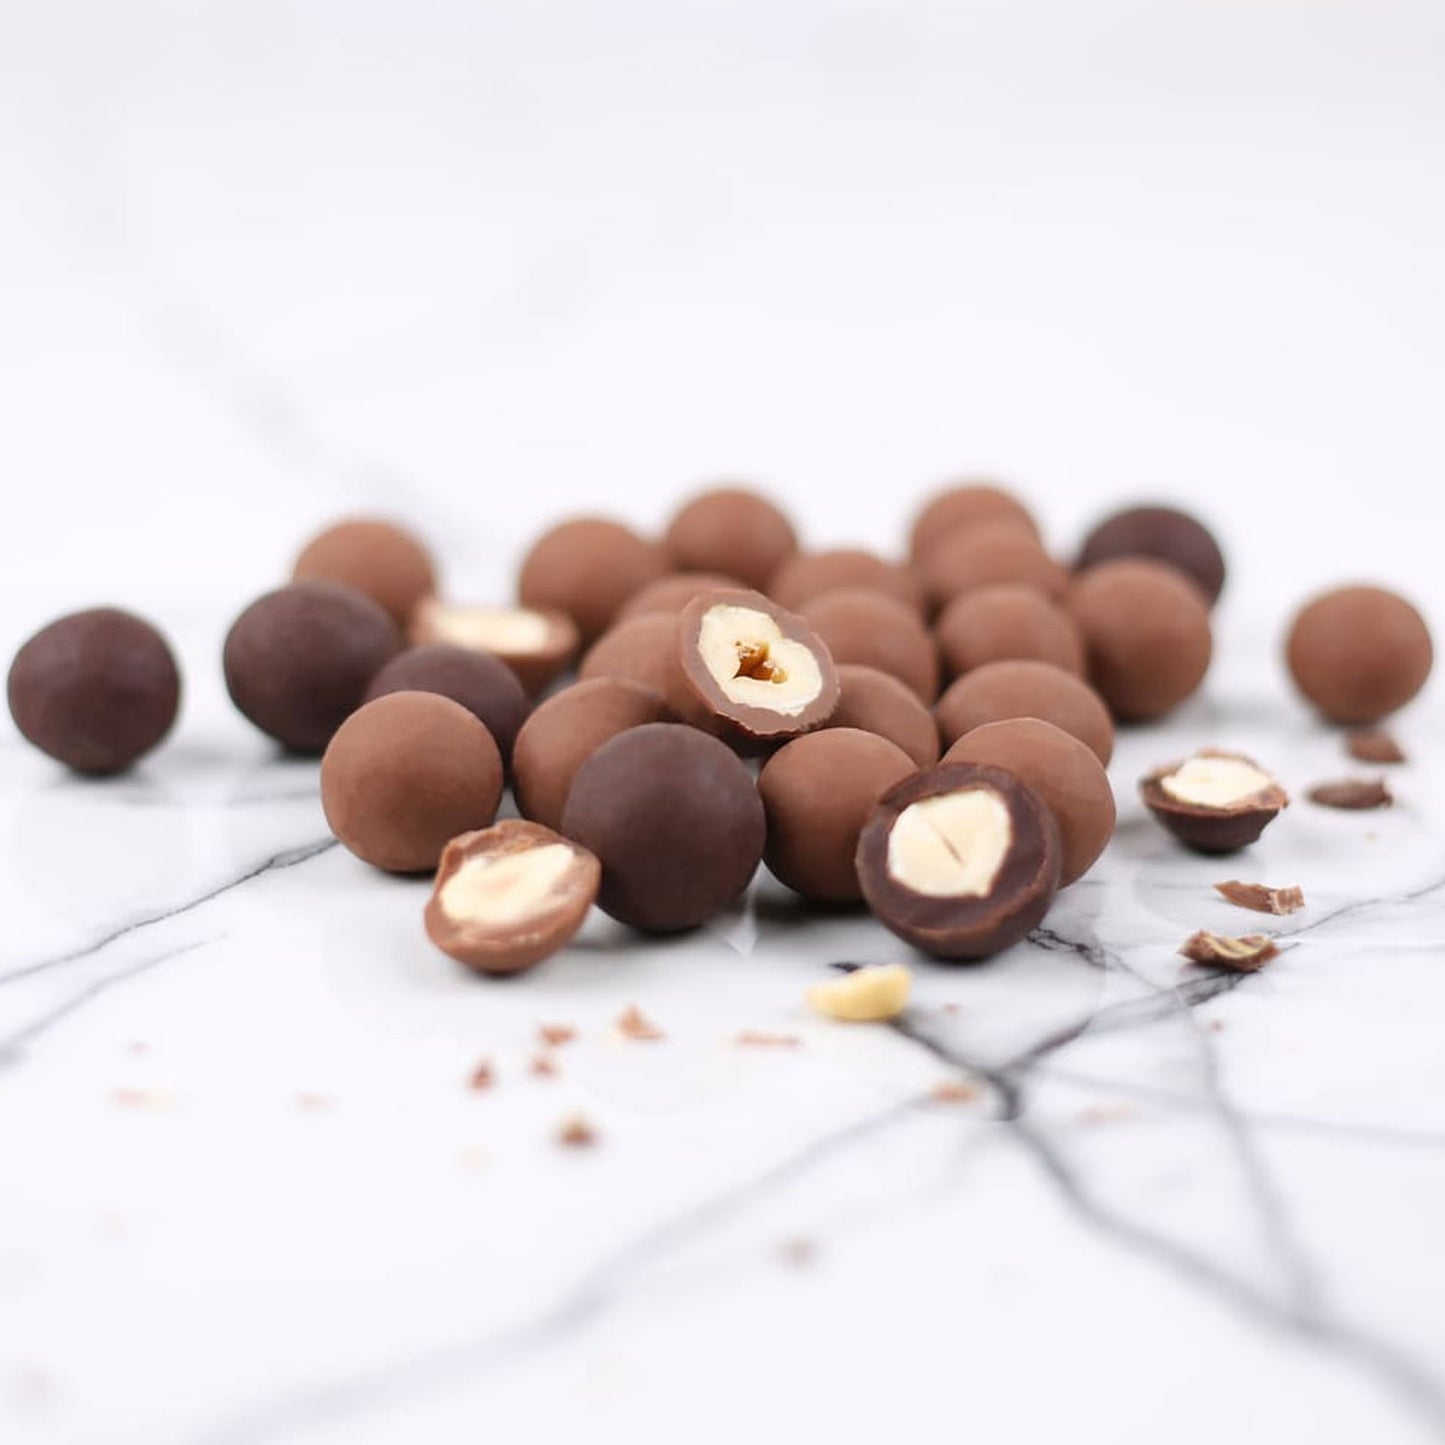 Le Chocolat des Francais Milk and Dark Chocolate Covered Hazelnuts